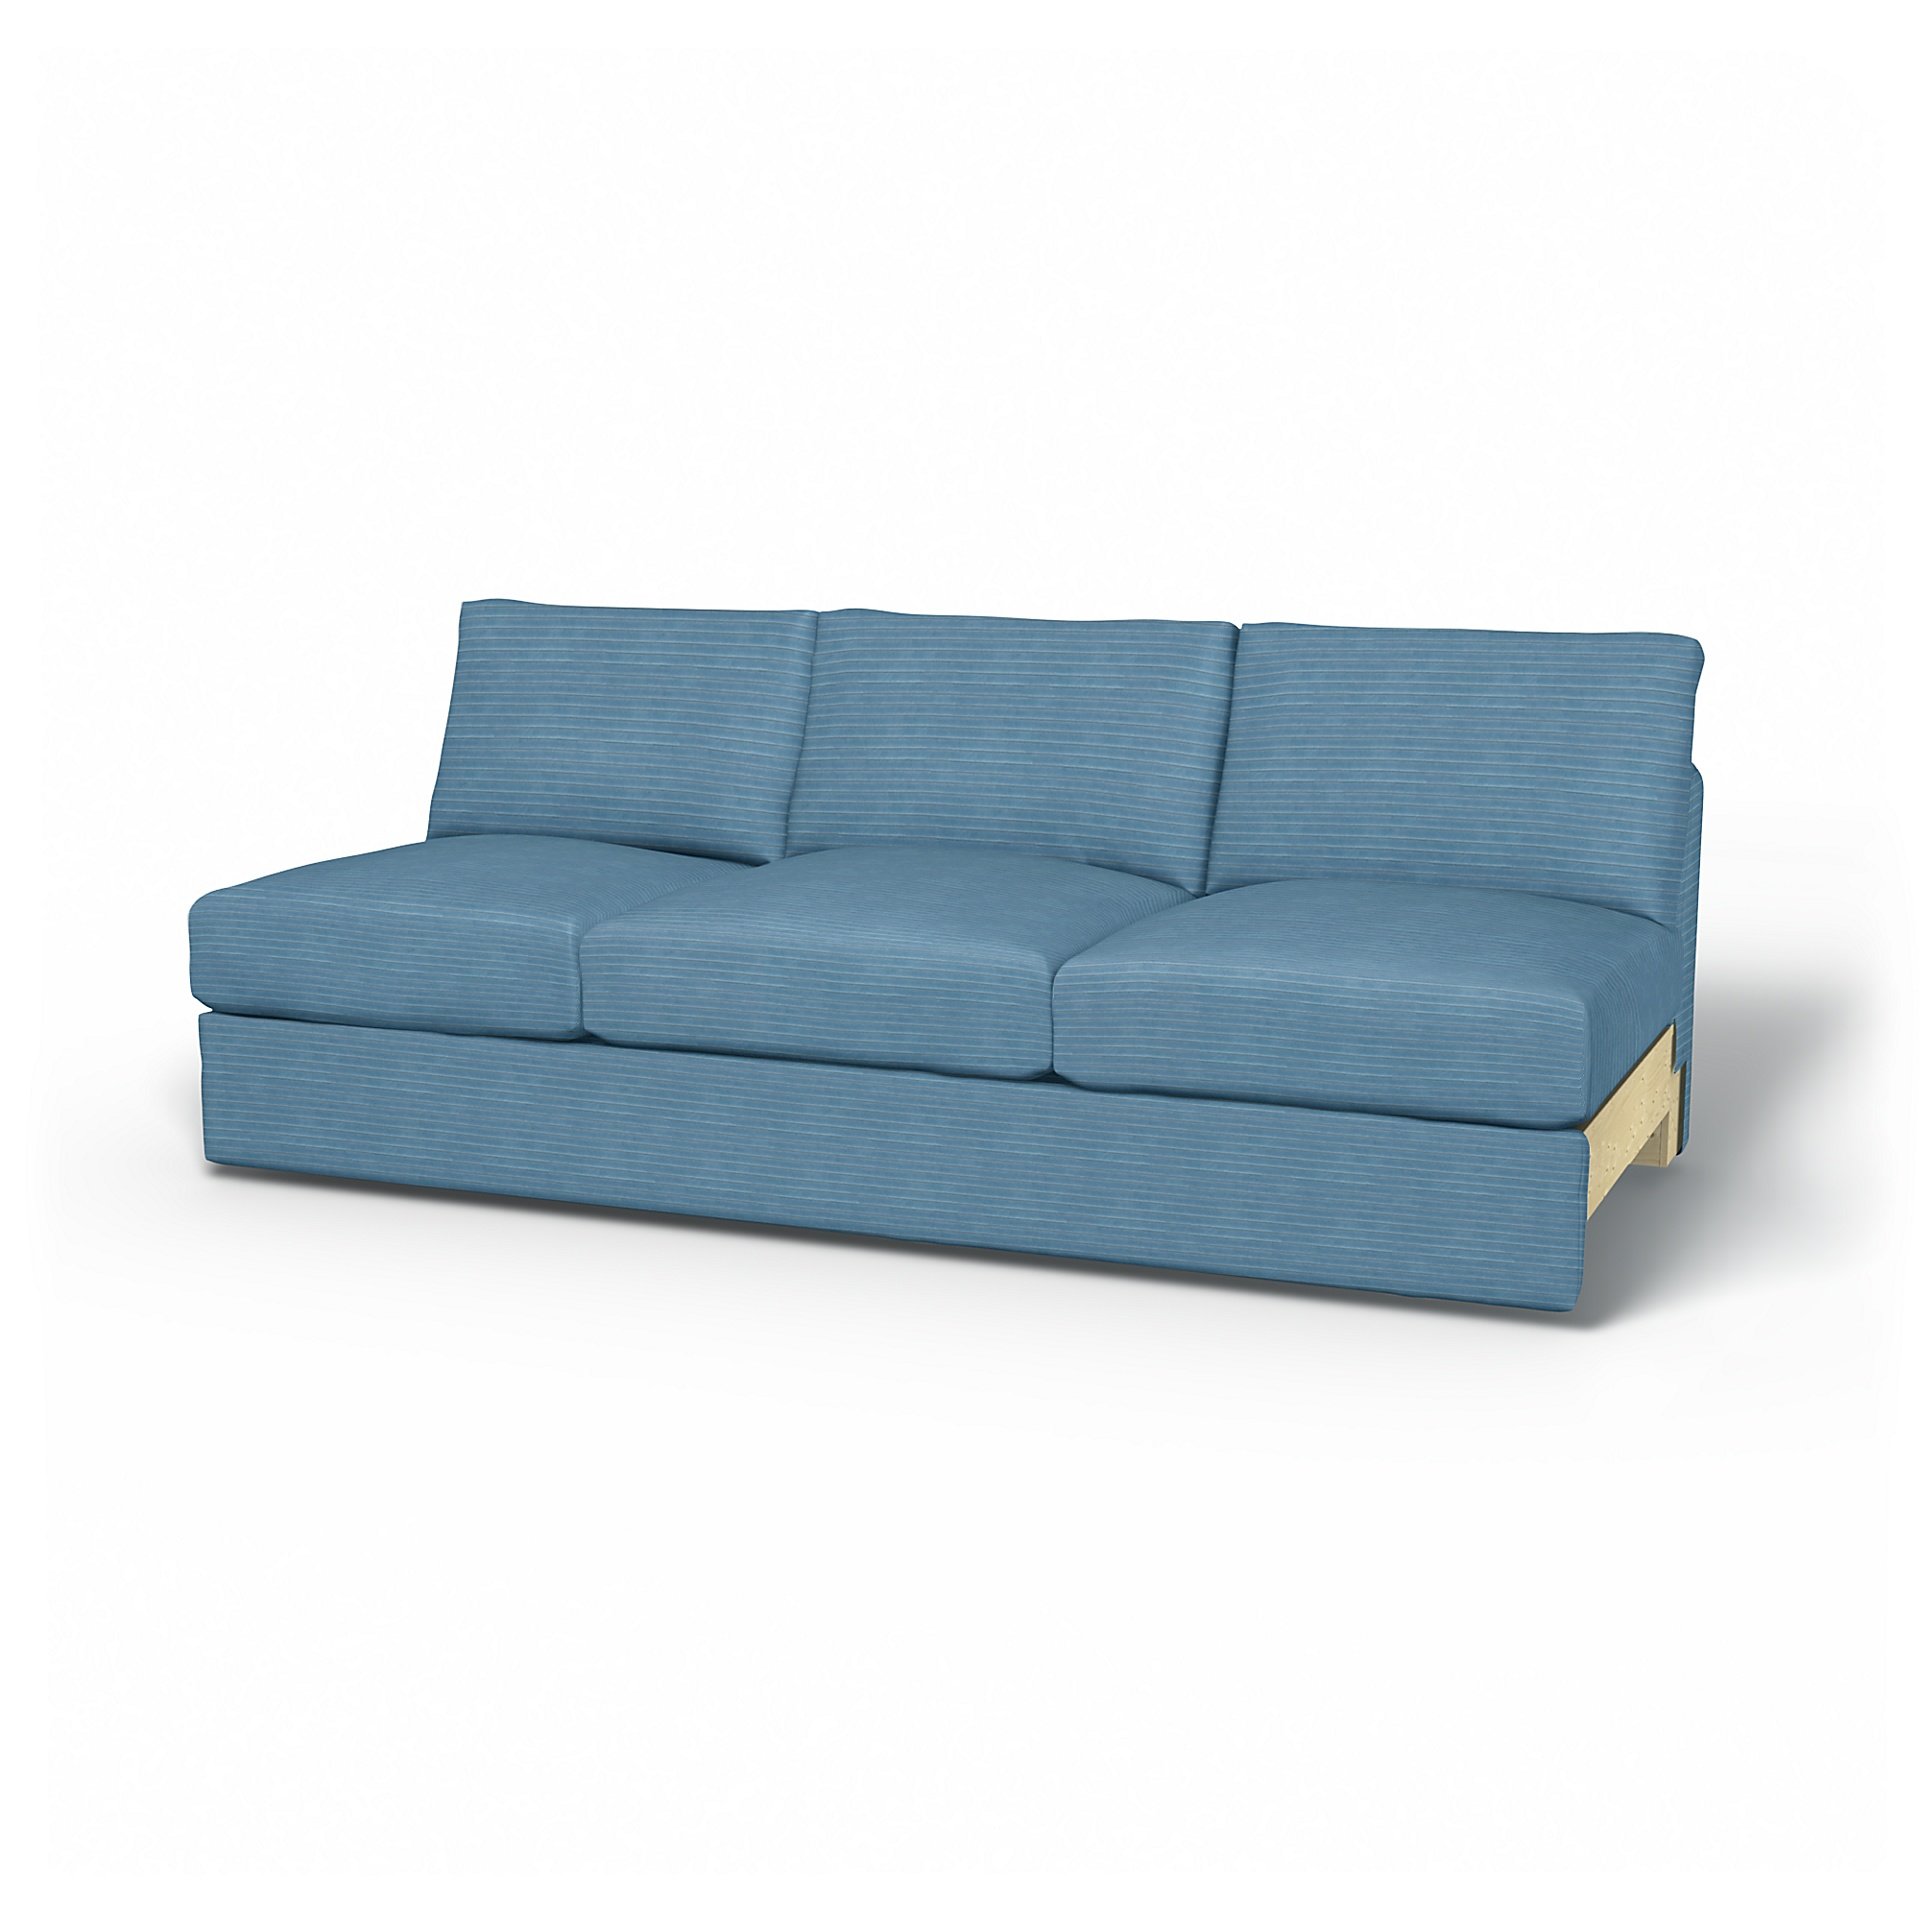 IKEA - Vimle 3 Seat Section Cover, Sky Blue, Corduroy - Bemz